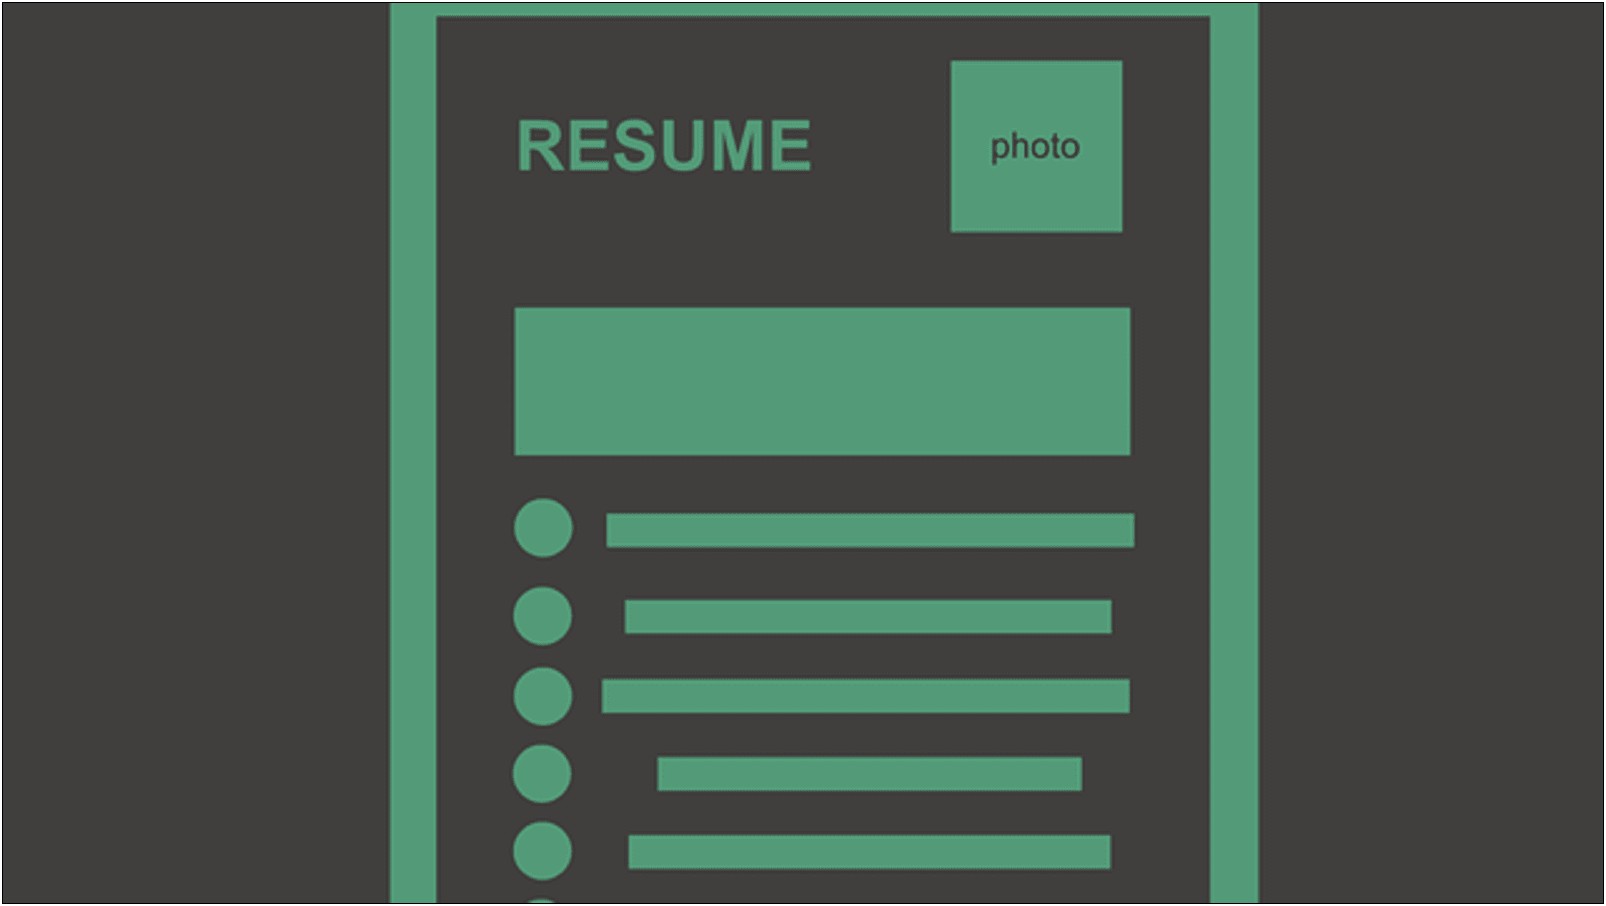 Recruiter Forward Resume To Hiring Manager